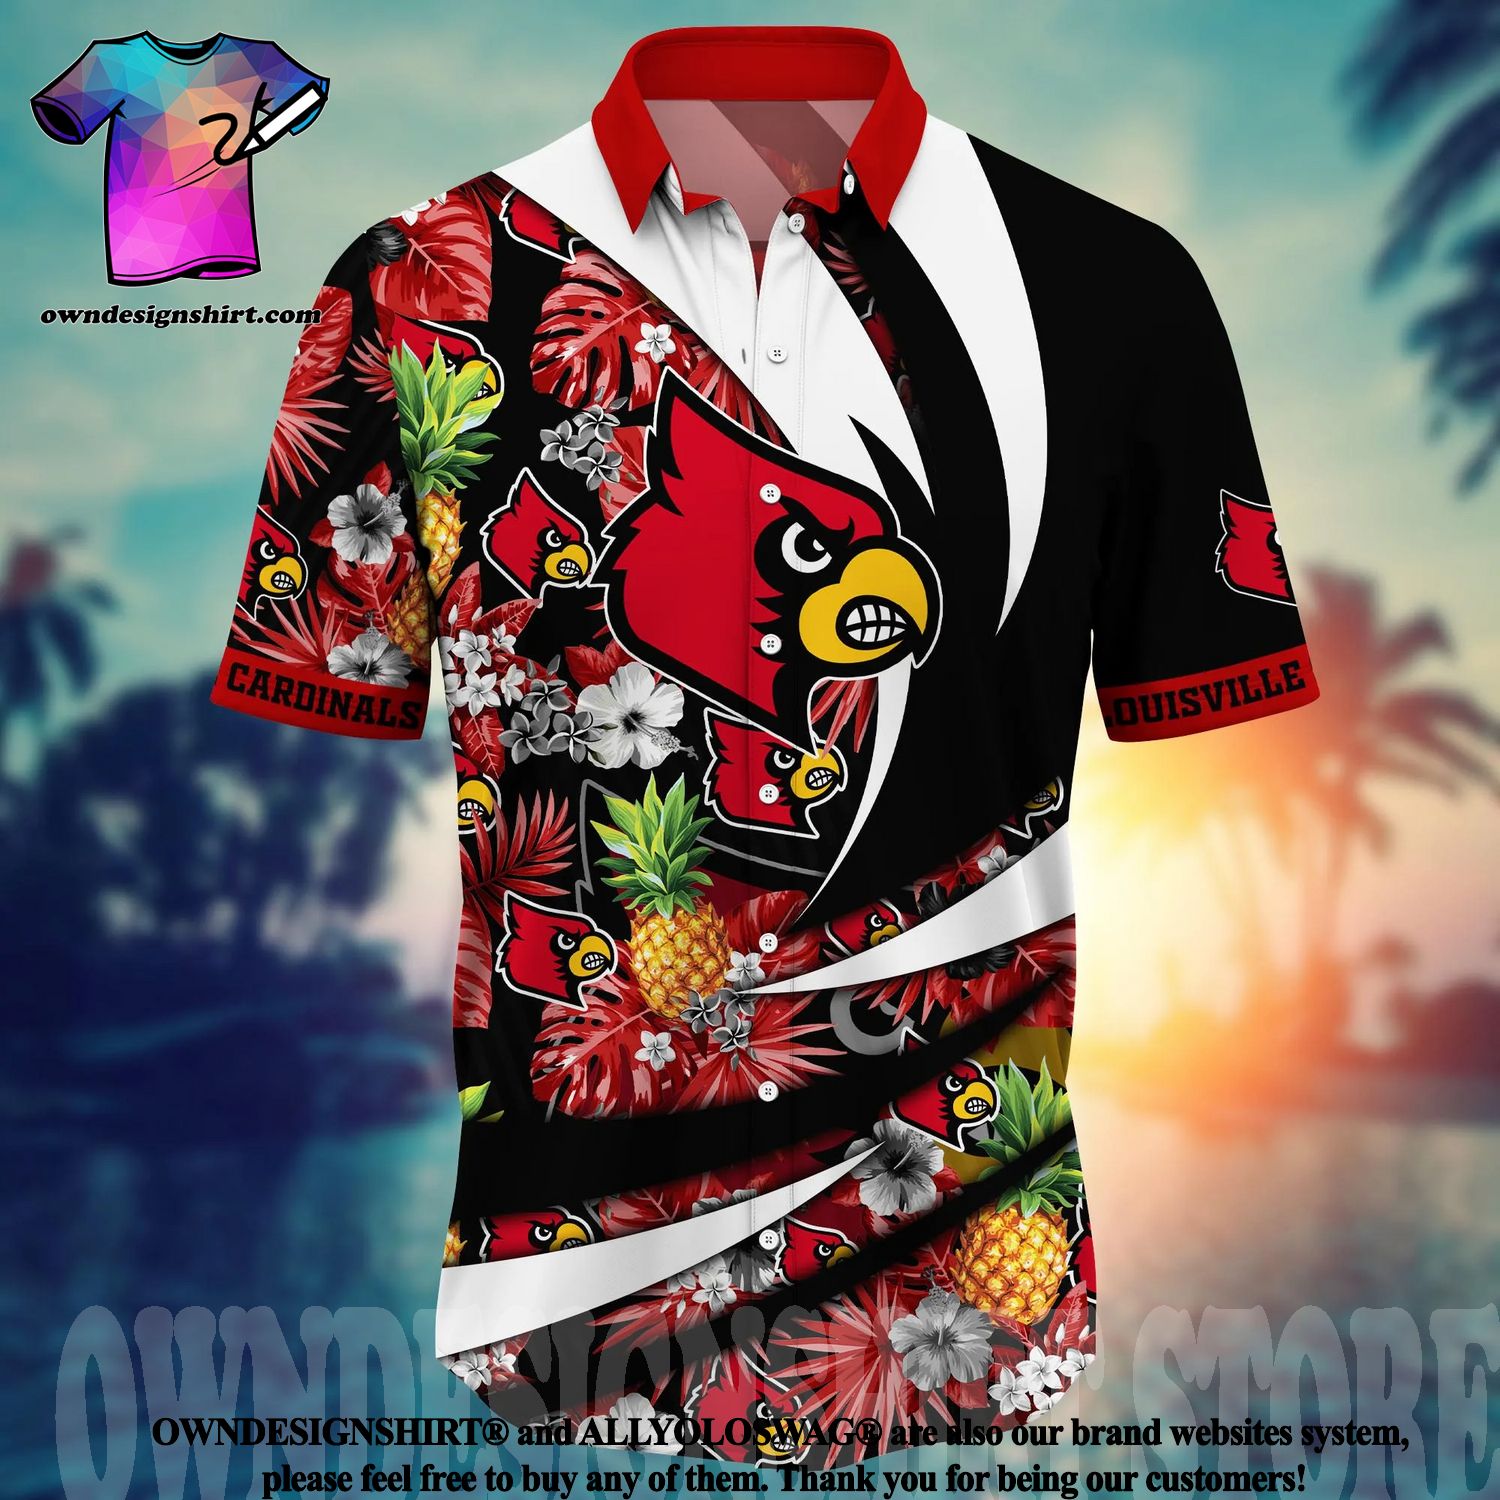 Louisville Cardinals NCAA Blankets for sale